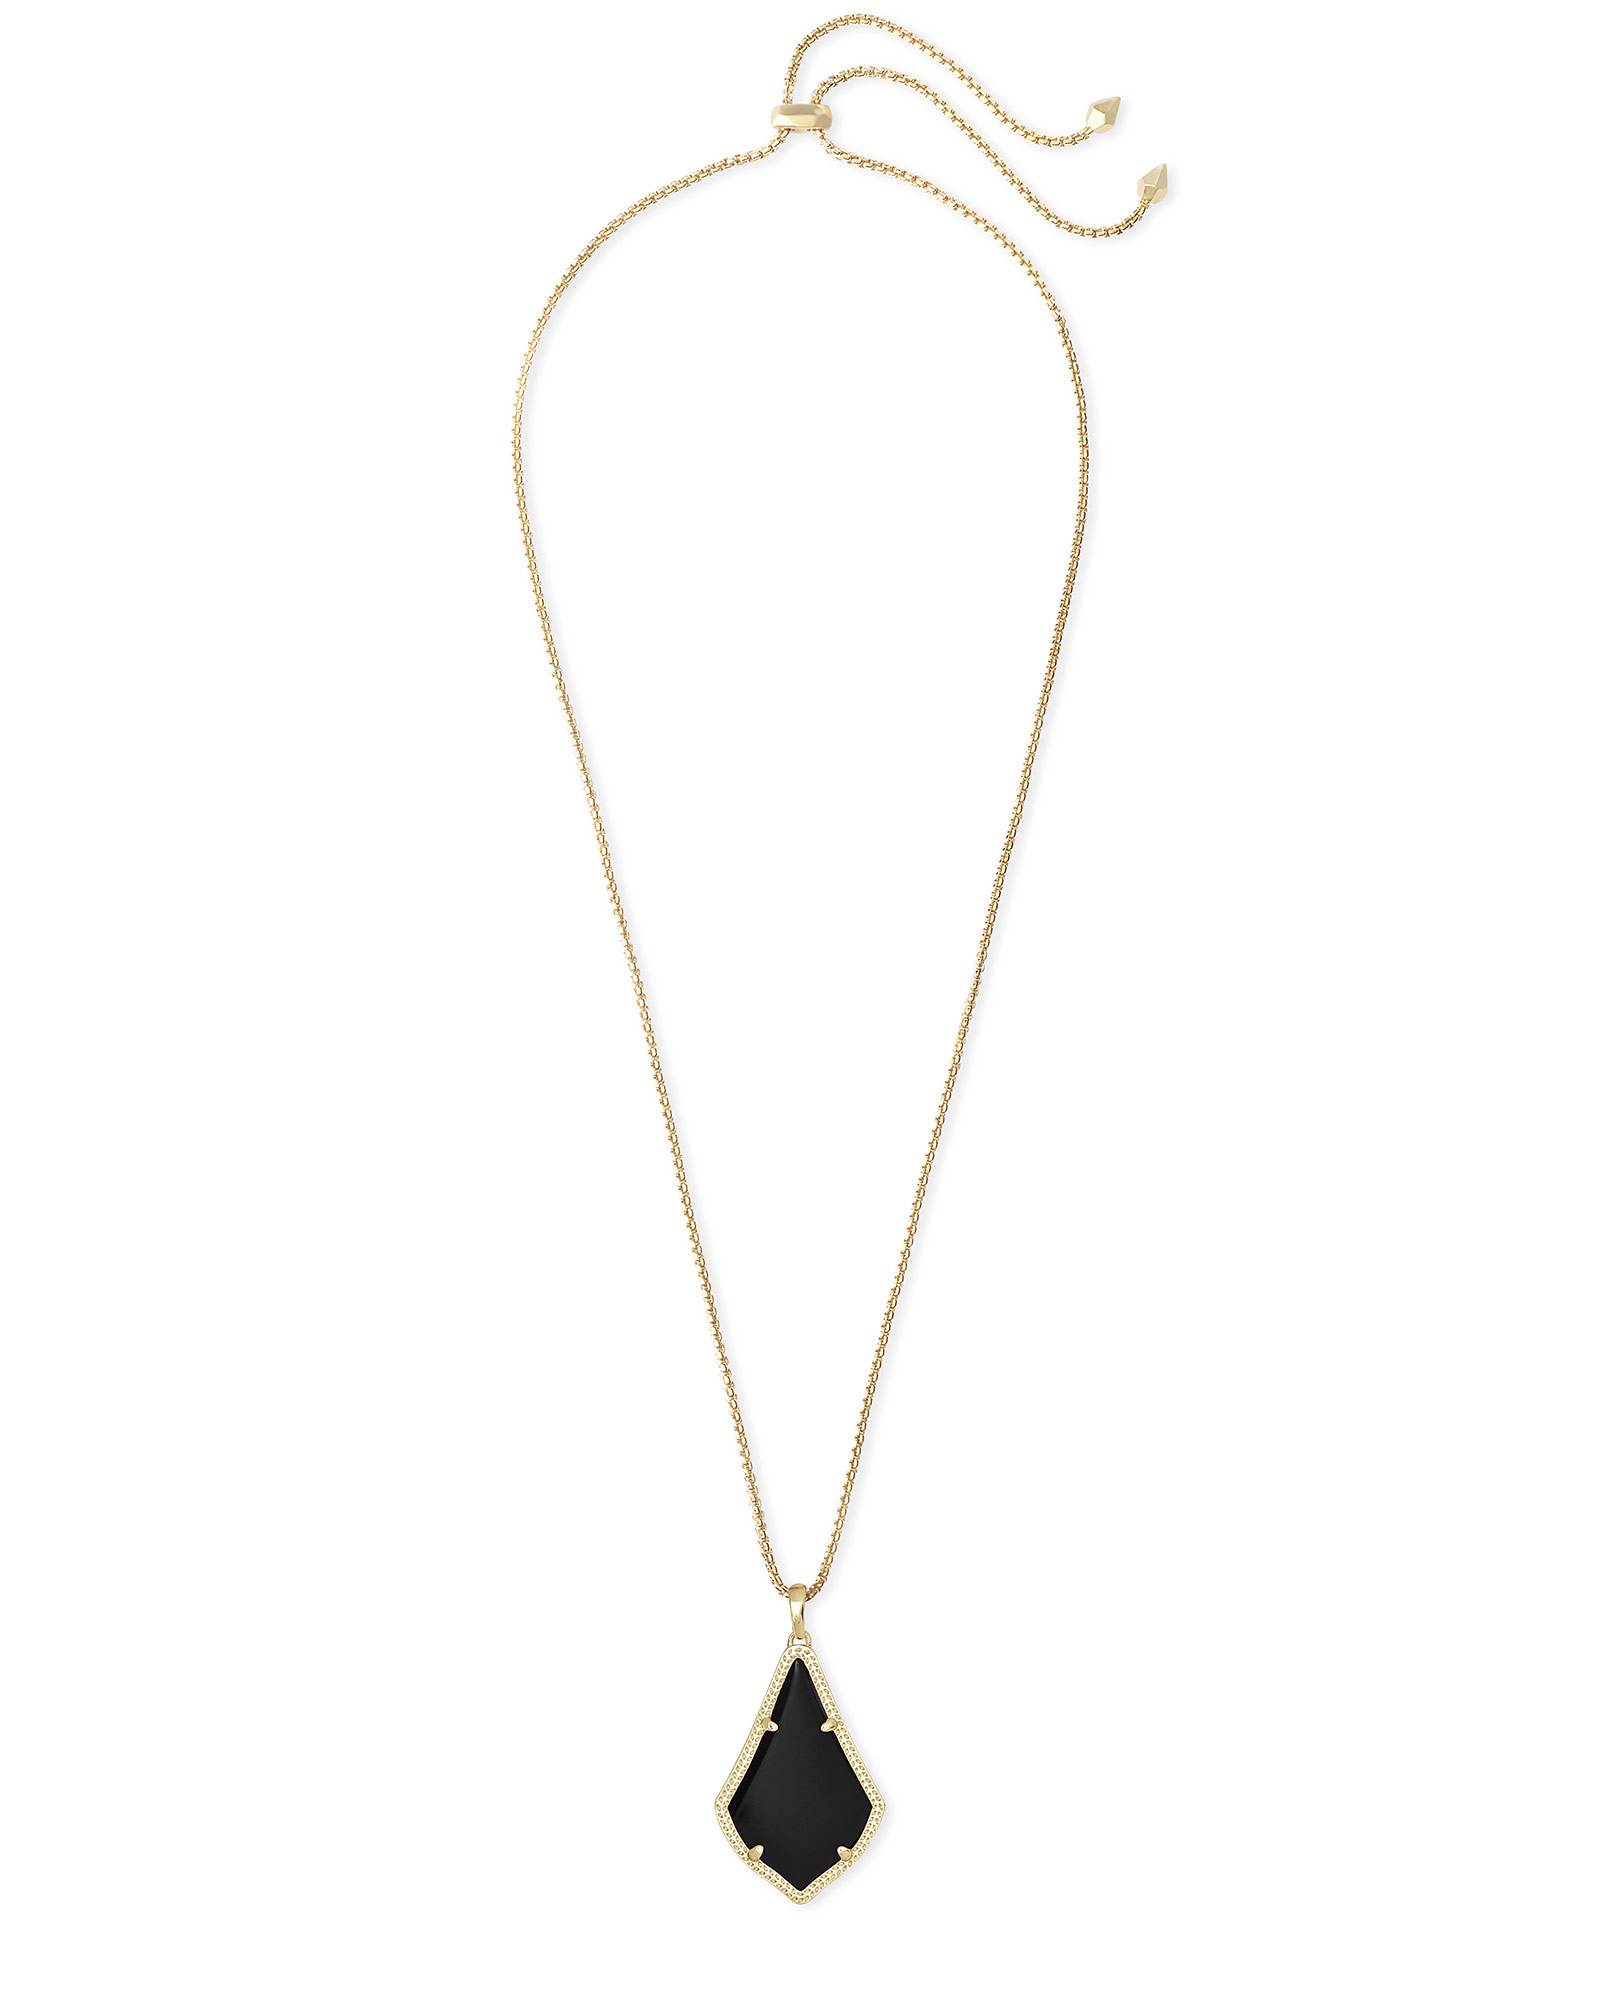 Alex Gold Drop Necklace in Black Opaque Glass | Kendra Scott